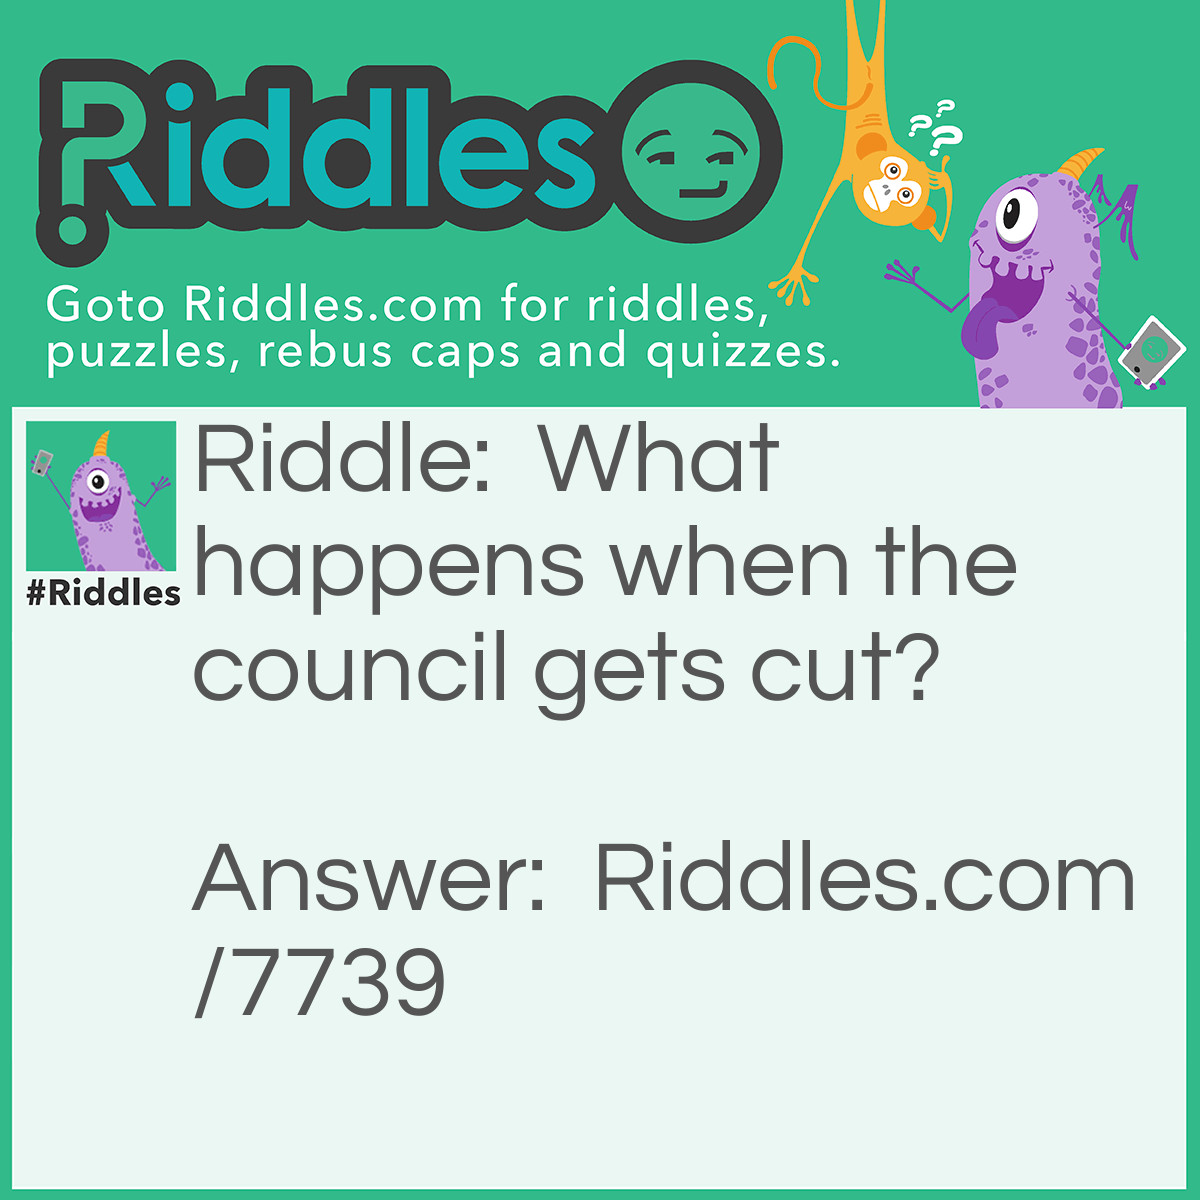 Riddle: What happens when the council gets cut? Answer: It assembleeds